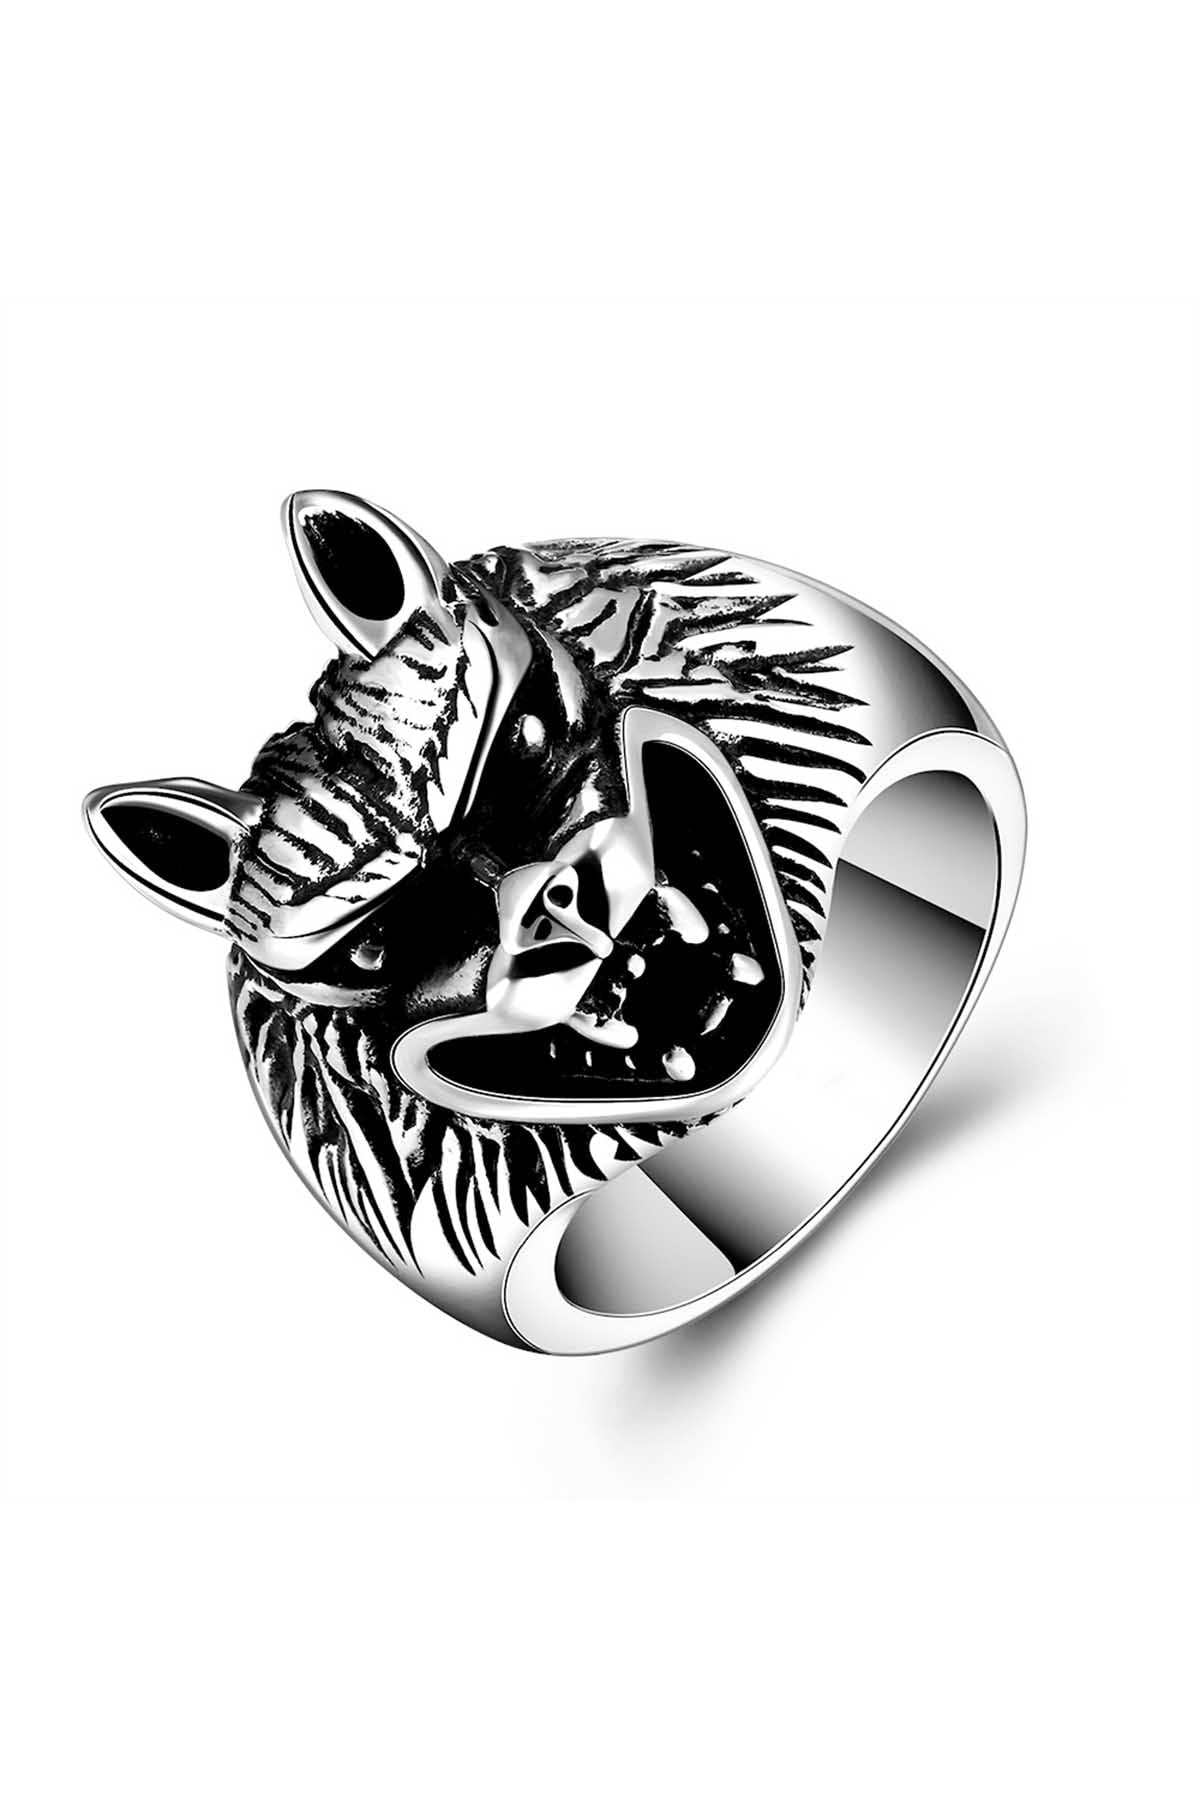 Gomaya Cool Wolf Stainless Steel Ring